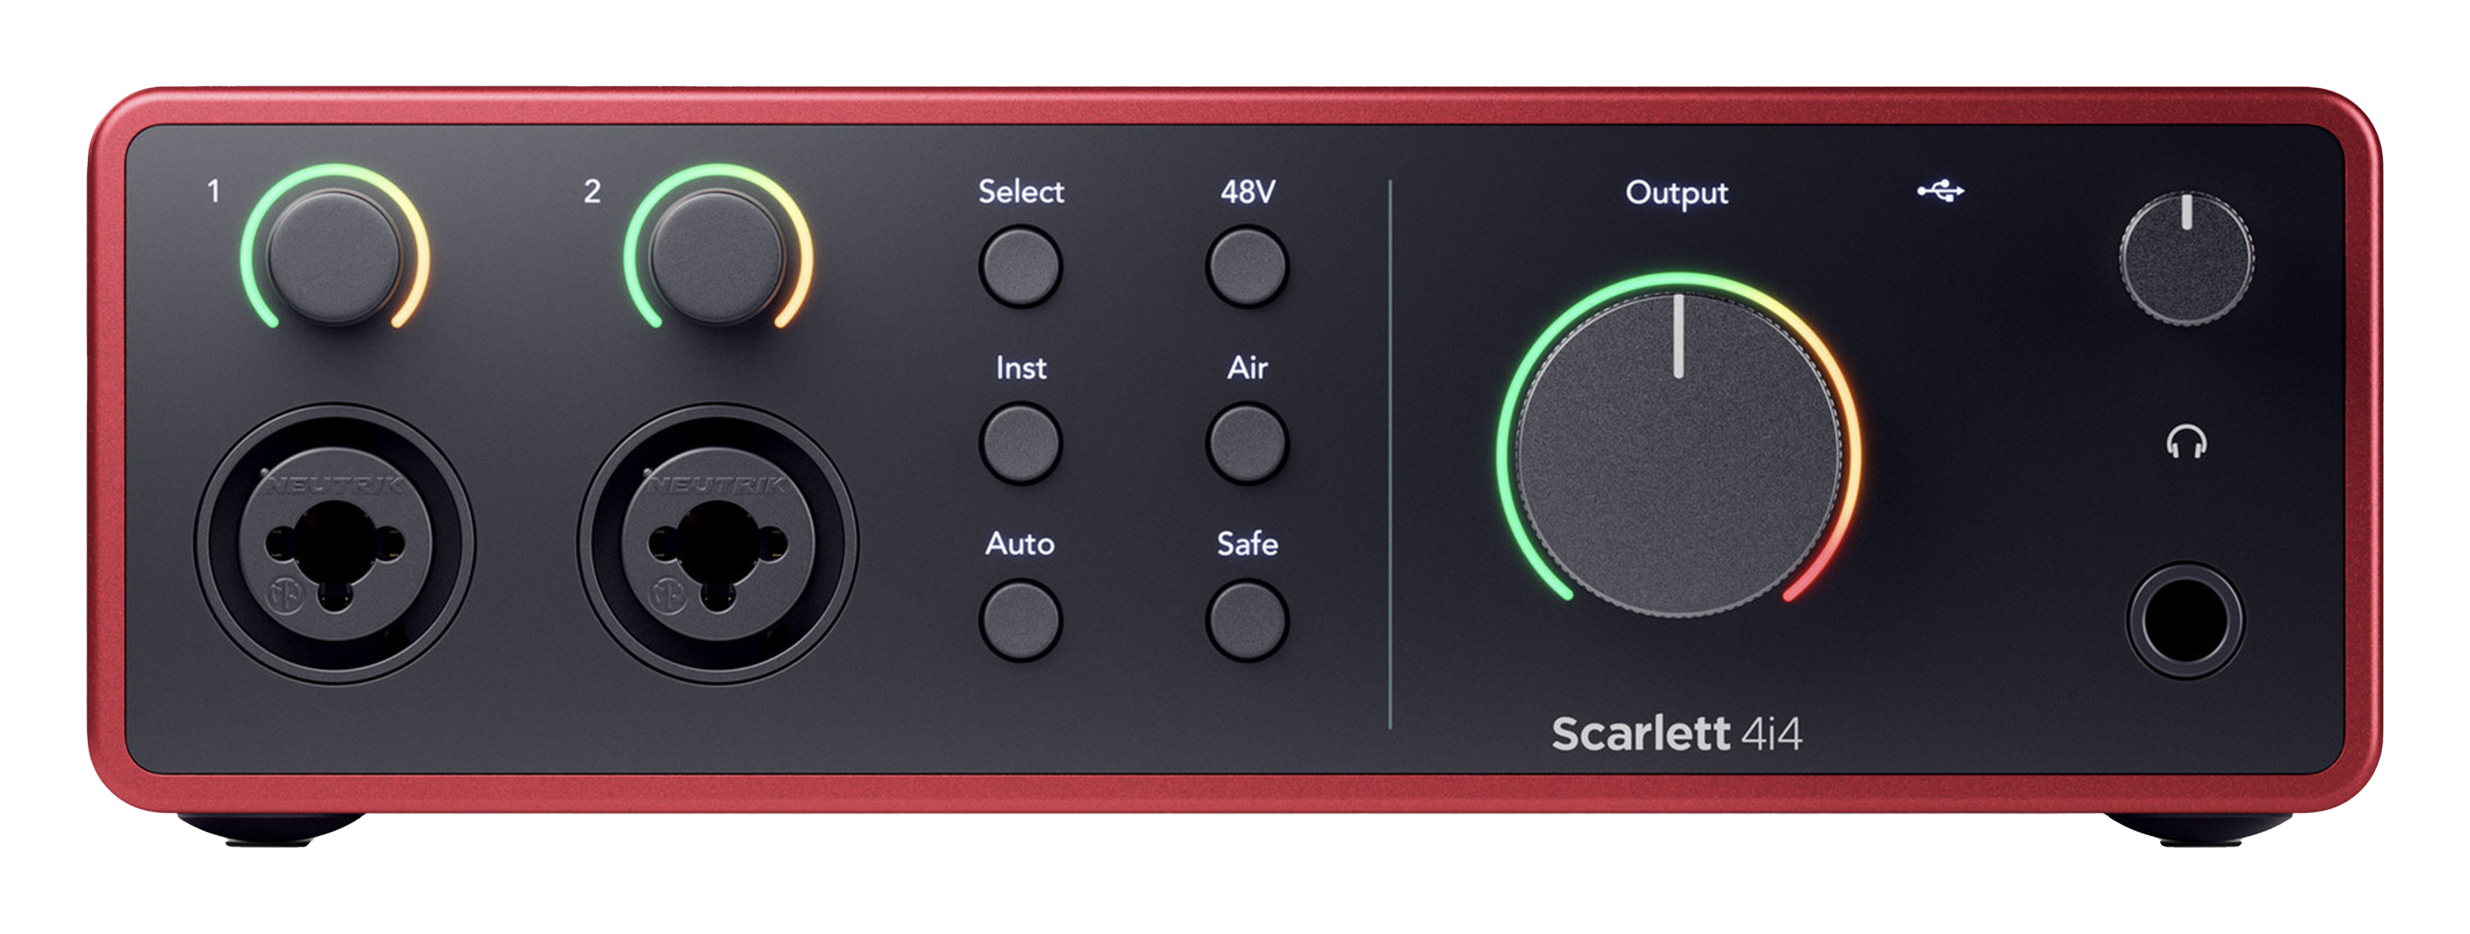 Focusrite Scarlett Solo 4th Gen 2x2 USB Audio Interface, 4th